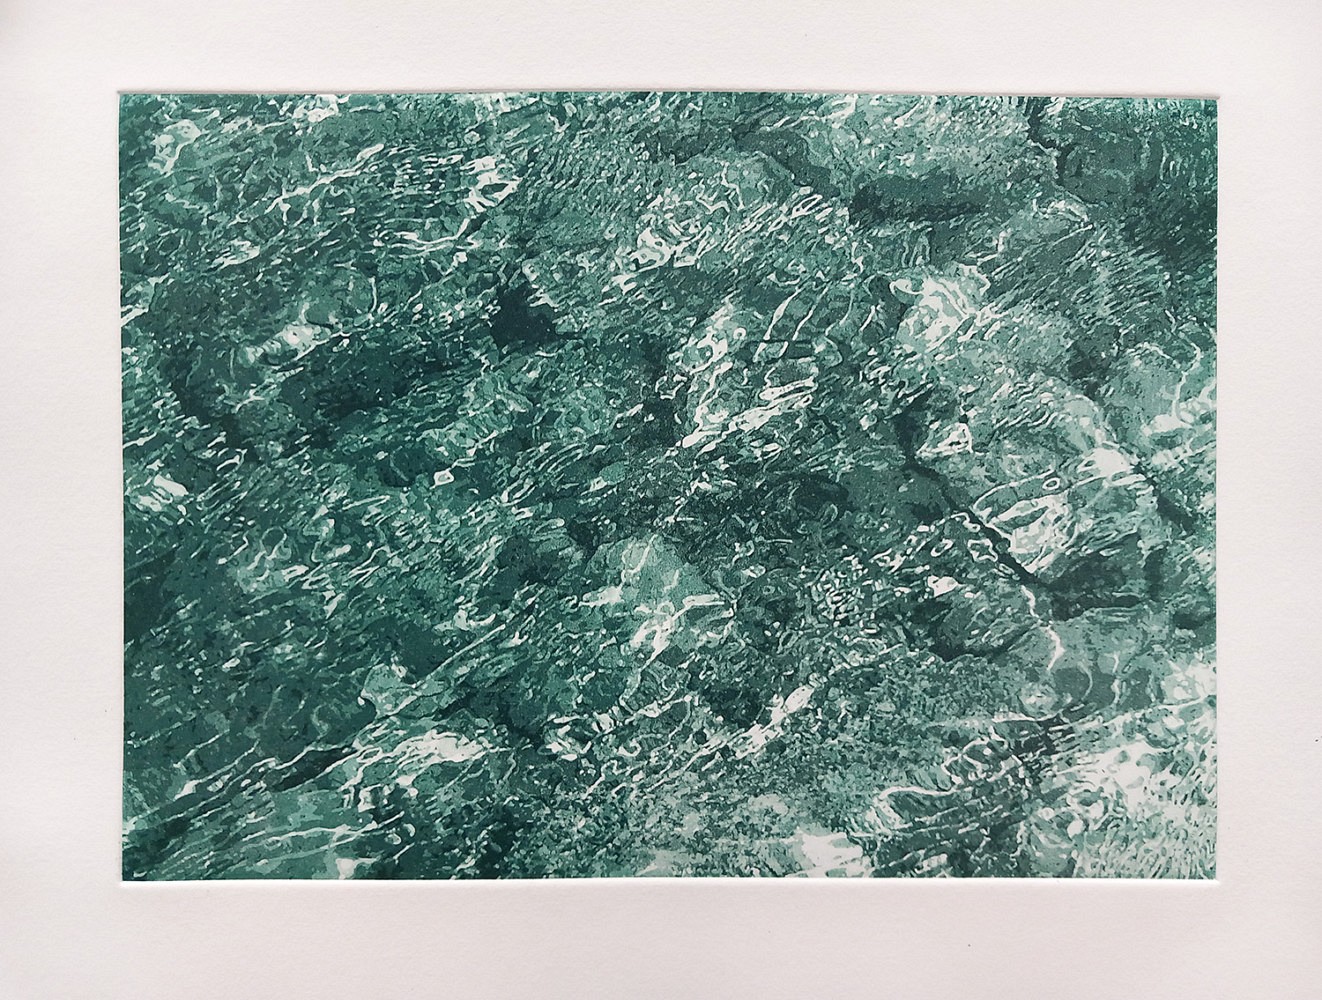 Flaque 3 | Aquatinte
28x38 cm - 2023